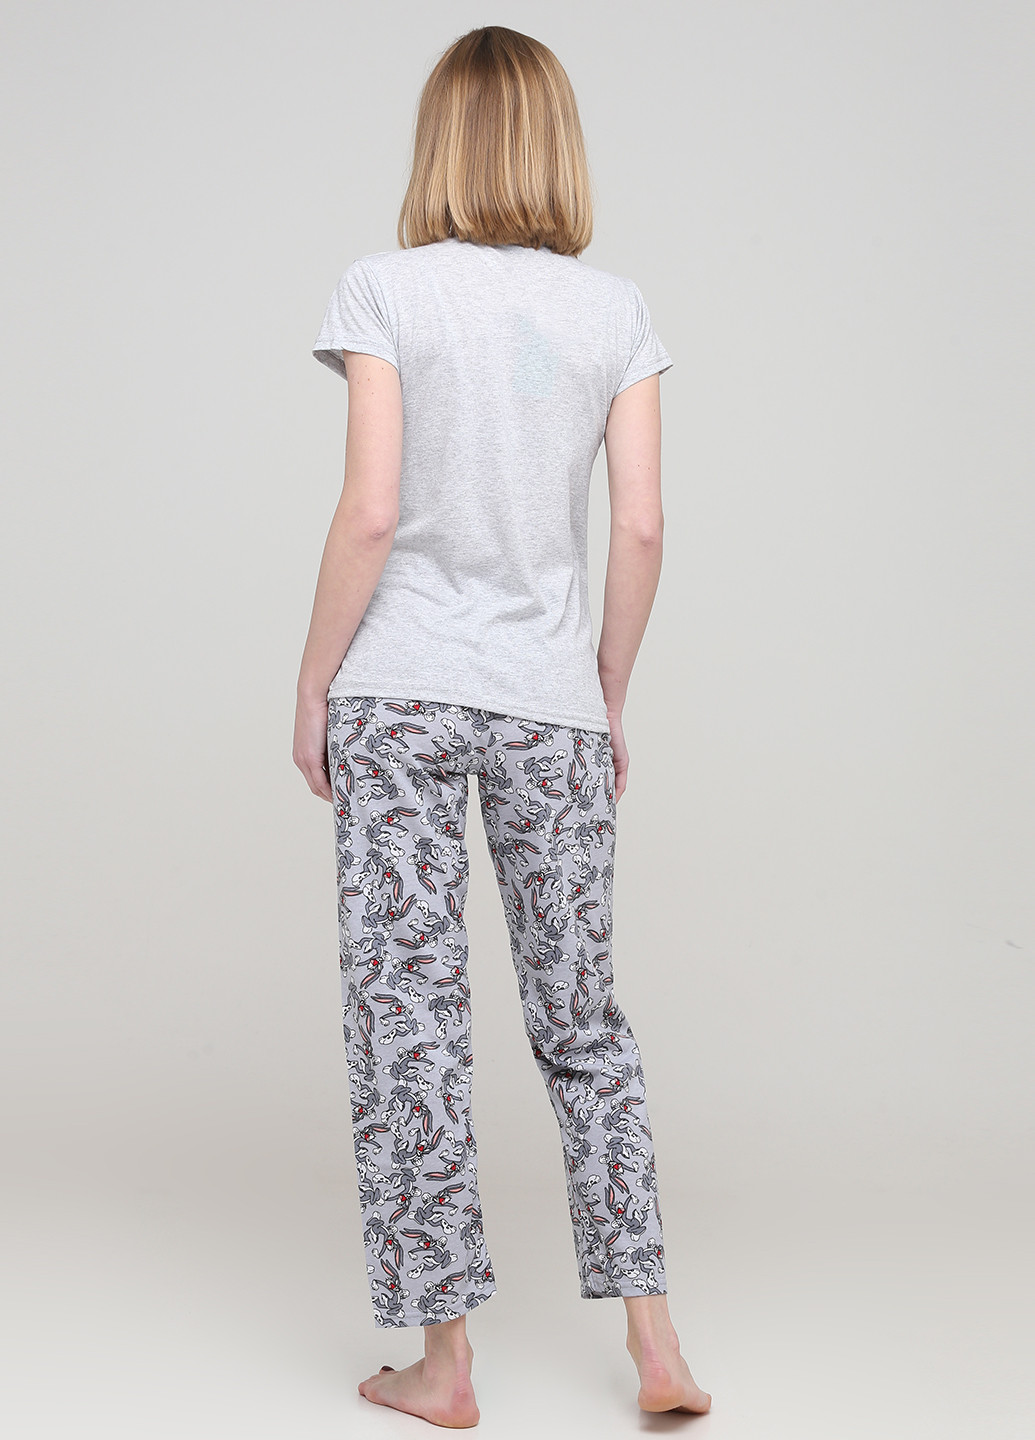 Светло-серая всесезон пижама (футболка, брюки) футболка + брюки Carla Mara